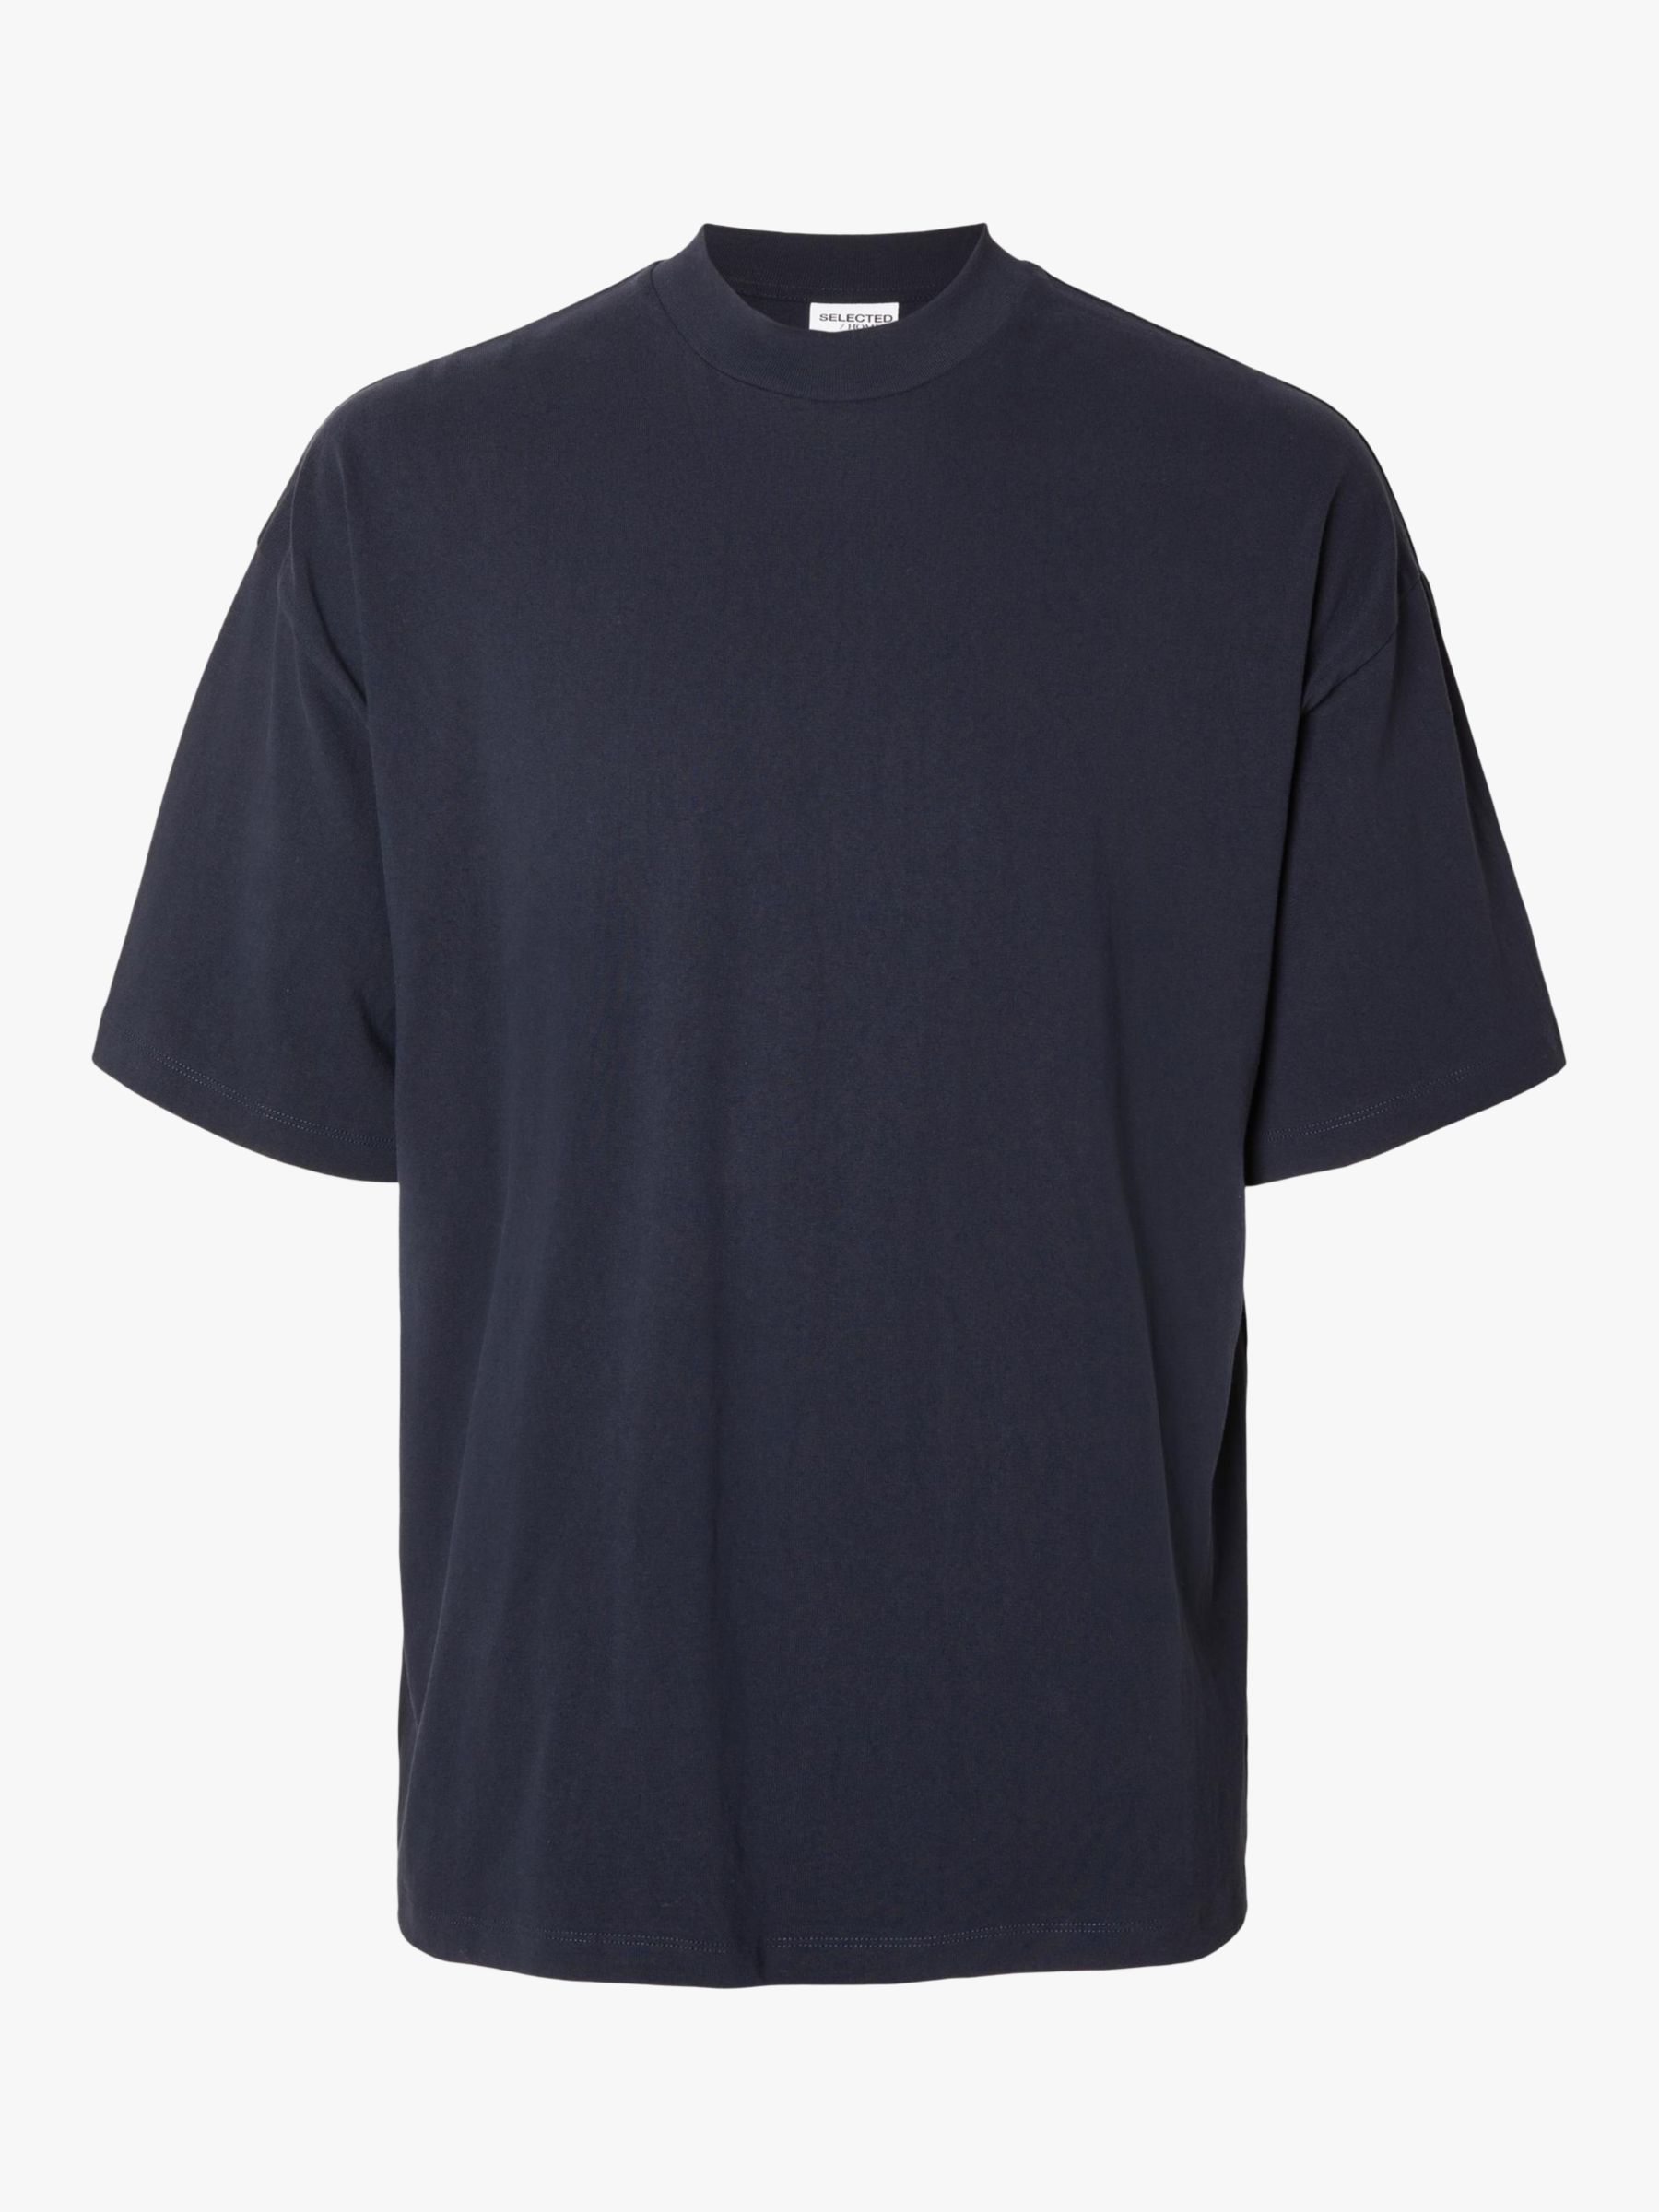 SELECTED HOMME Organic Cotton Blend Essential T-Shirt, Sky Captain, M